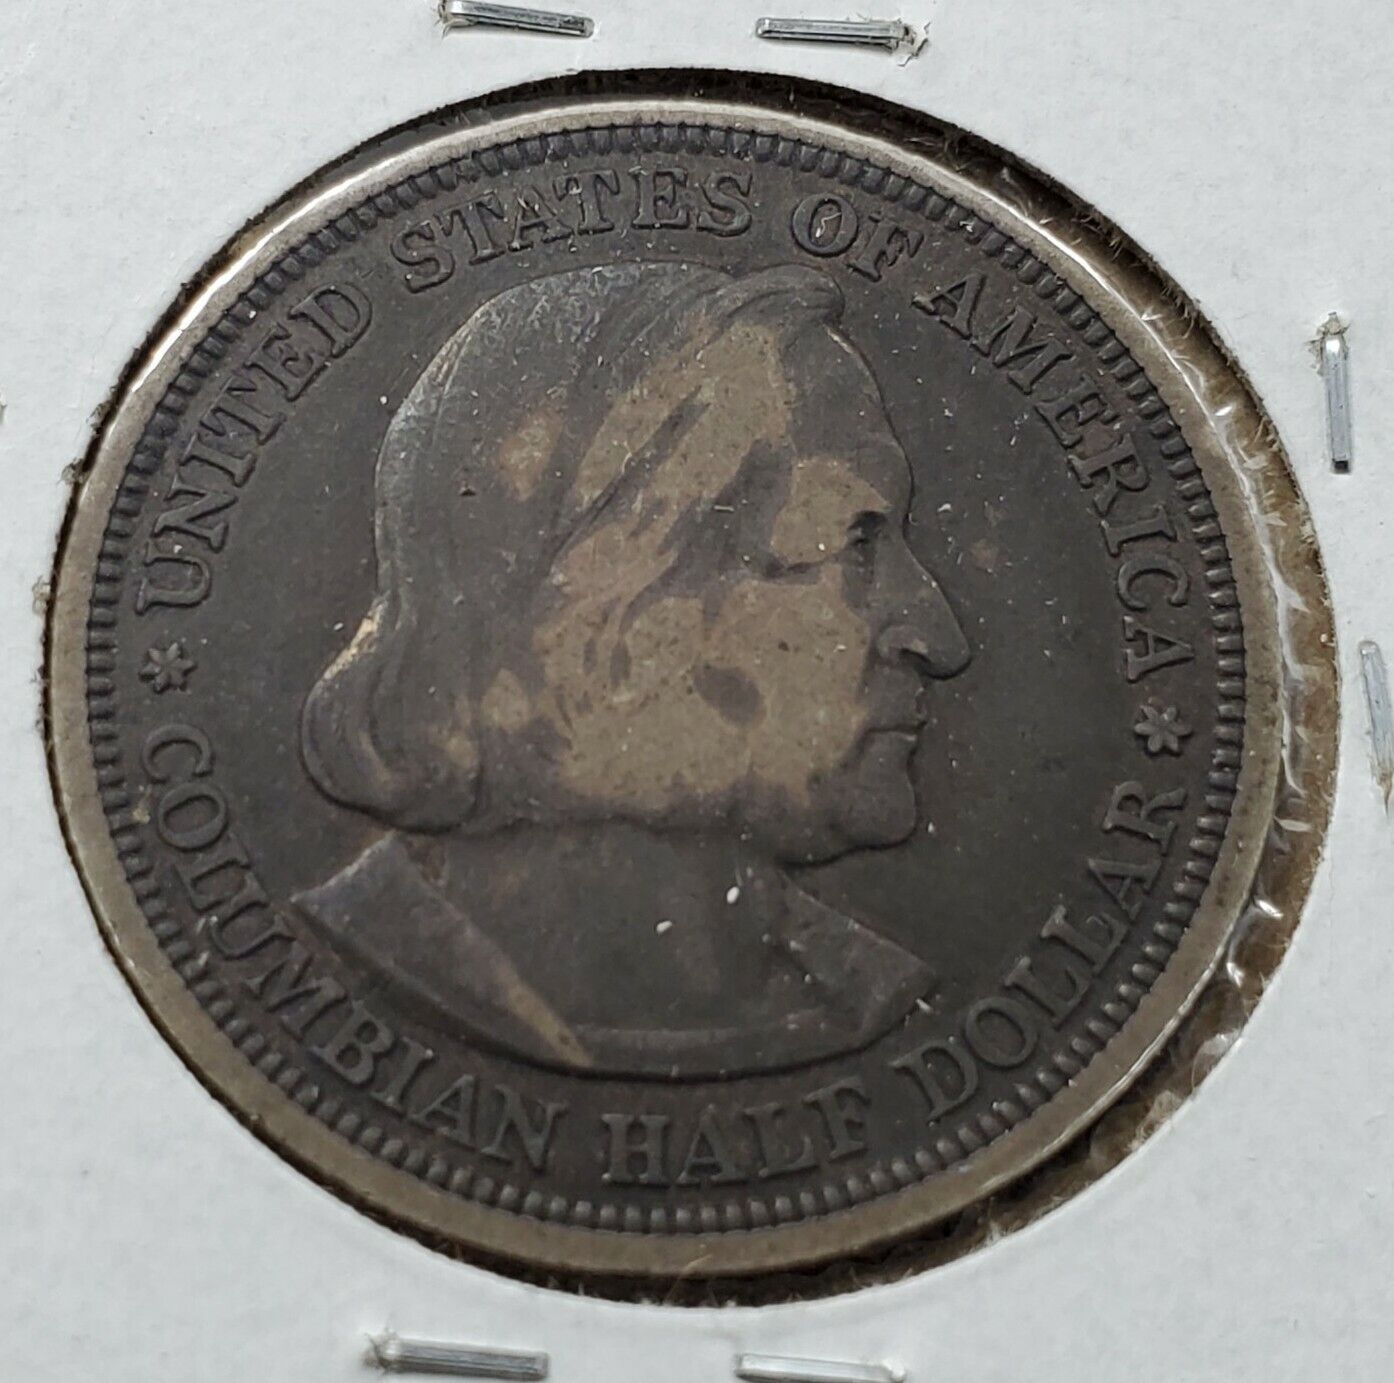 1893 US Christopher Columbian SILVER Half Dollar Commemorative AVG VF Very Fine2